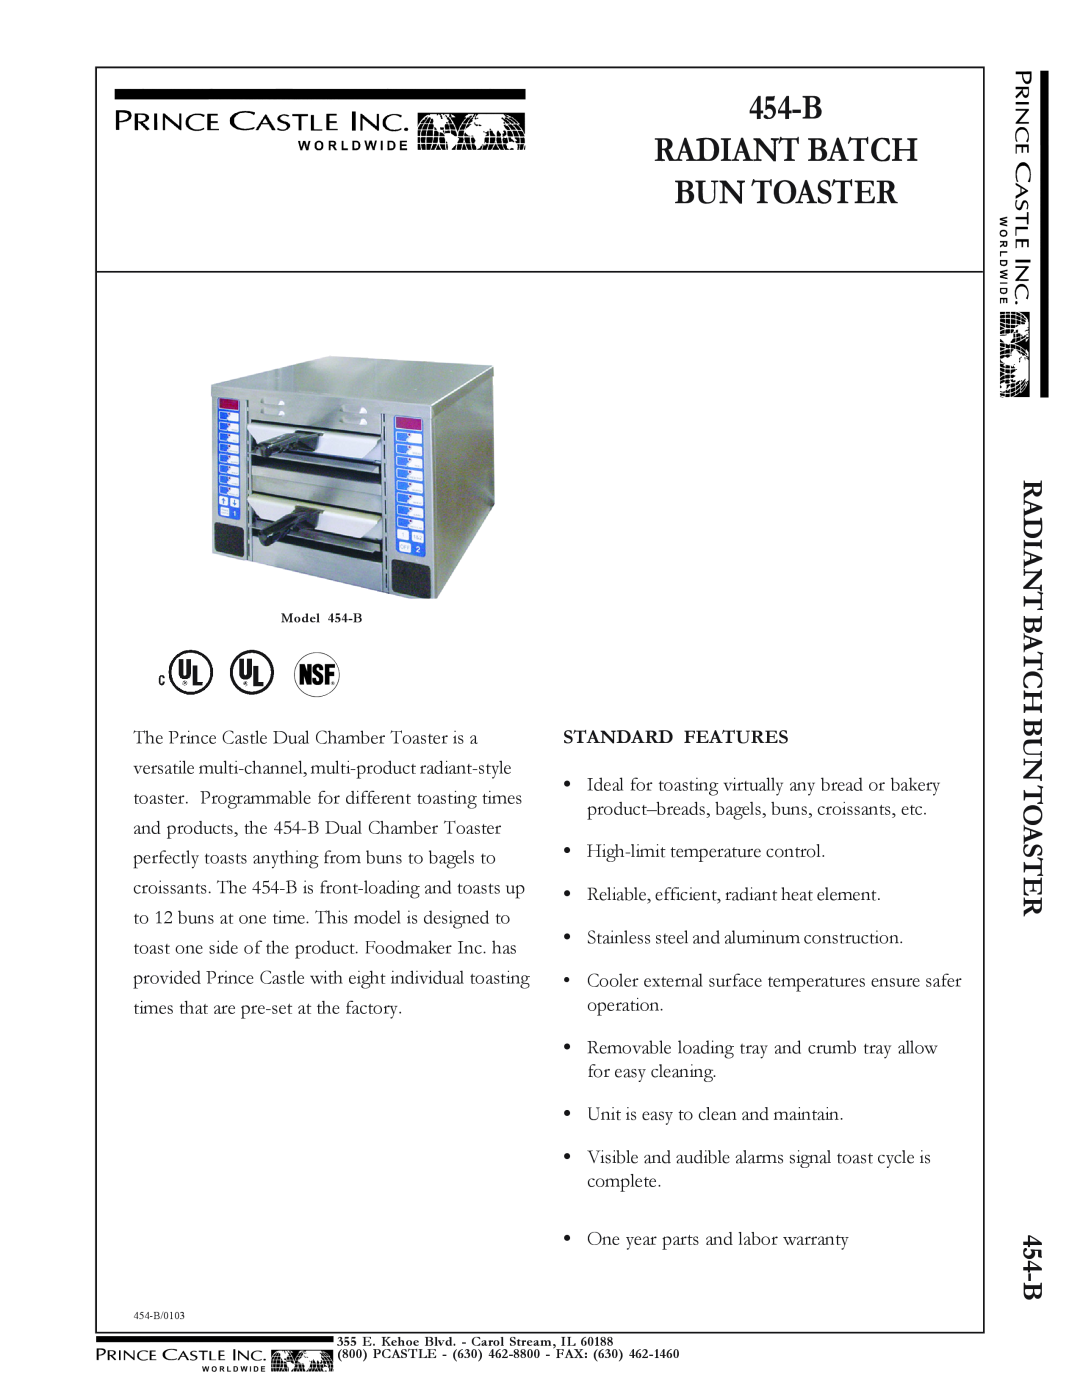 Prince Castle warranty B Radiant Batch Bun Toaster, BUN TOASTER 454-B, Standard Features 